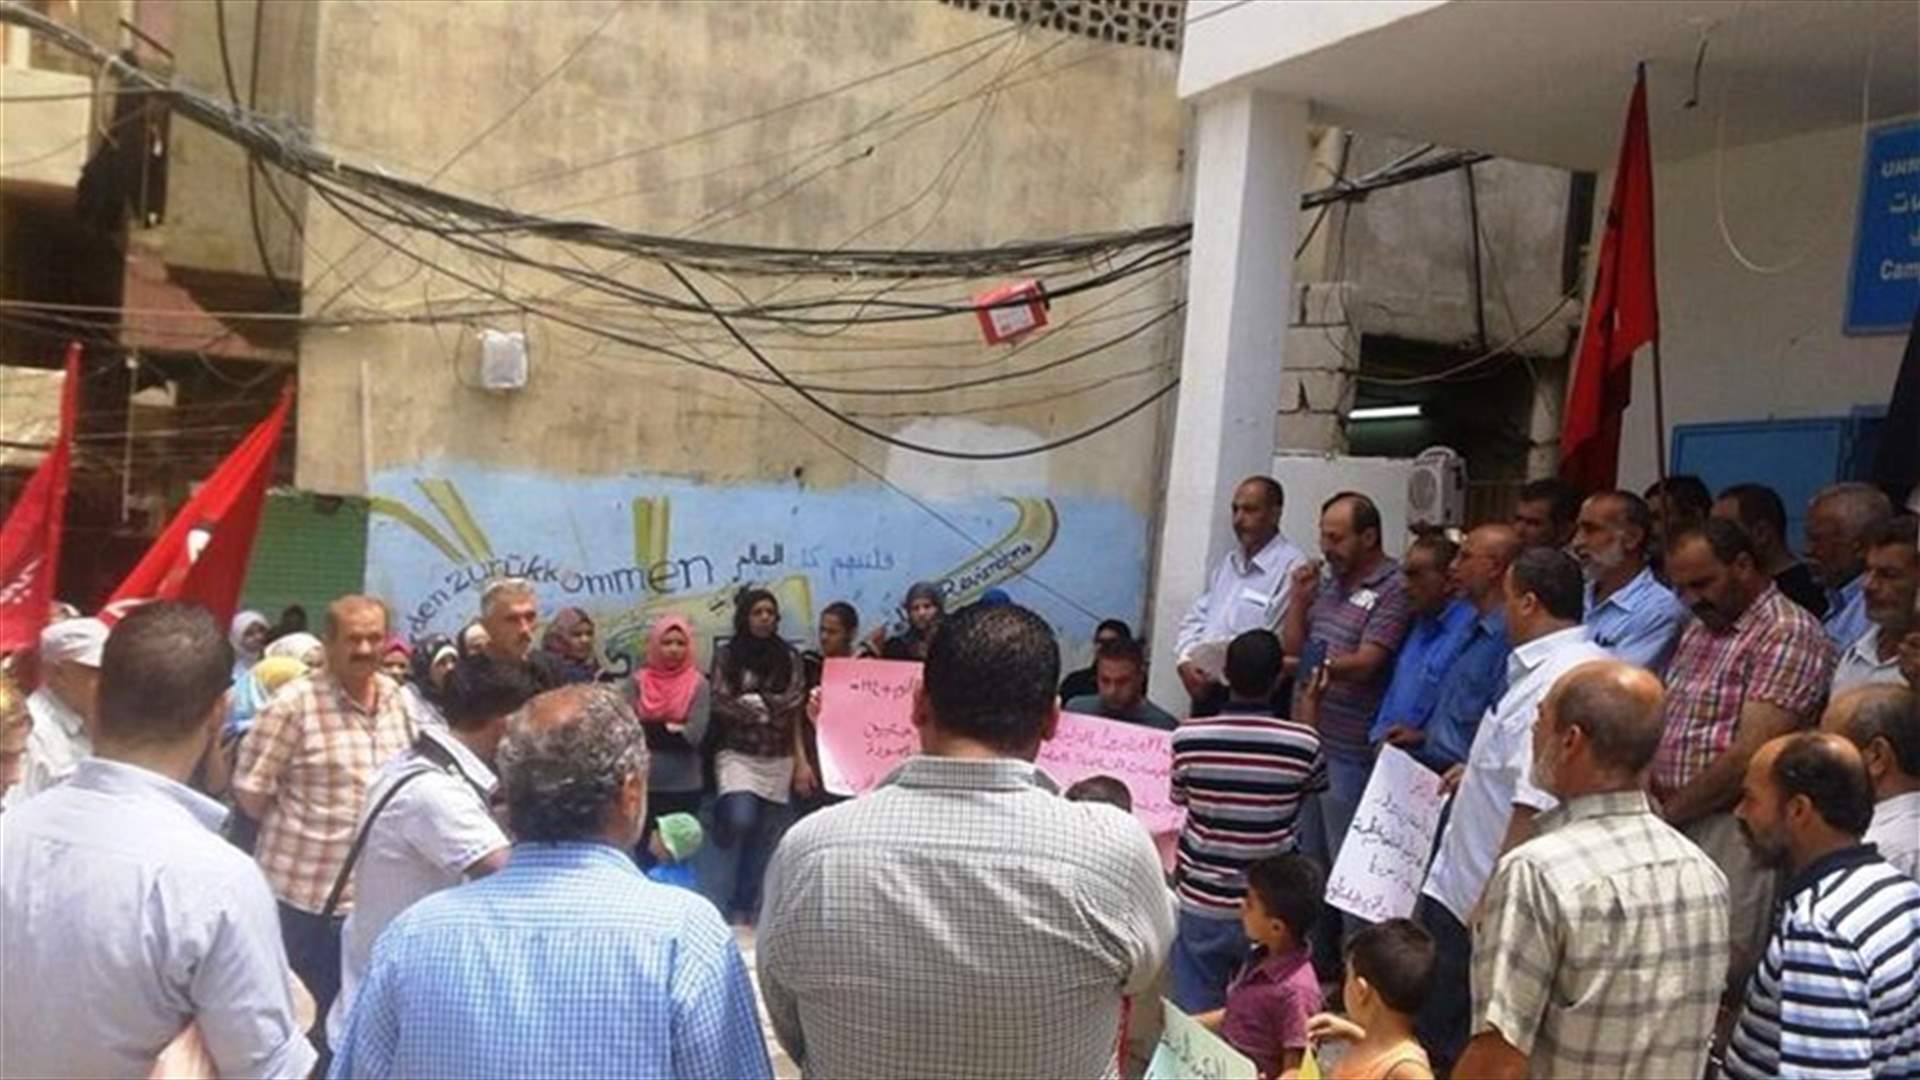 Protestors close UNRWA offices in al-Baddawi 